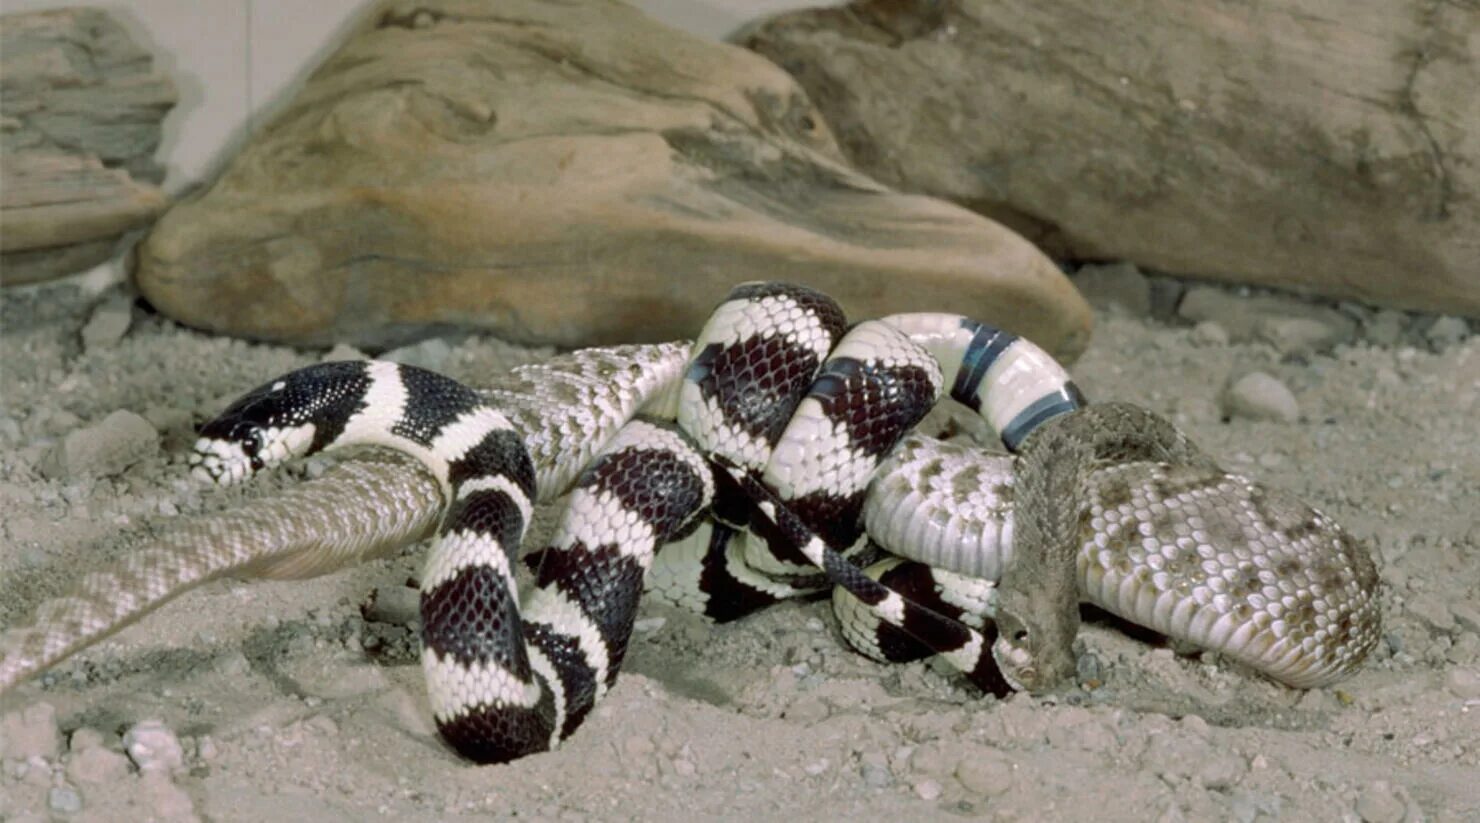 Королевские калифорнийские змеи. Калифорнийская Королевская змея черная. Калифорнийская гремучая змея. Королевский гремучник. Змеиная битва